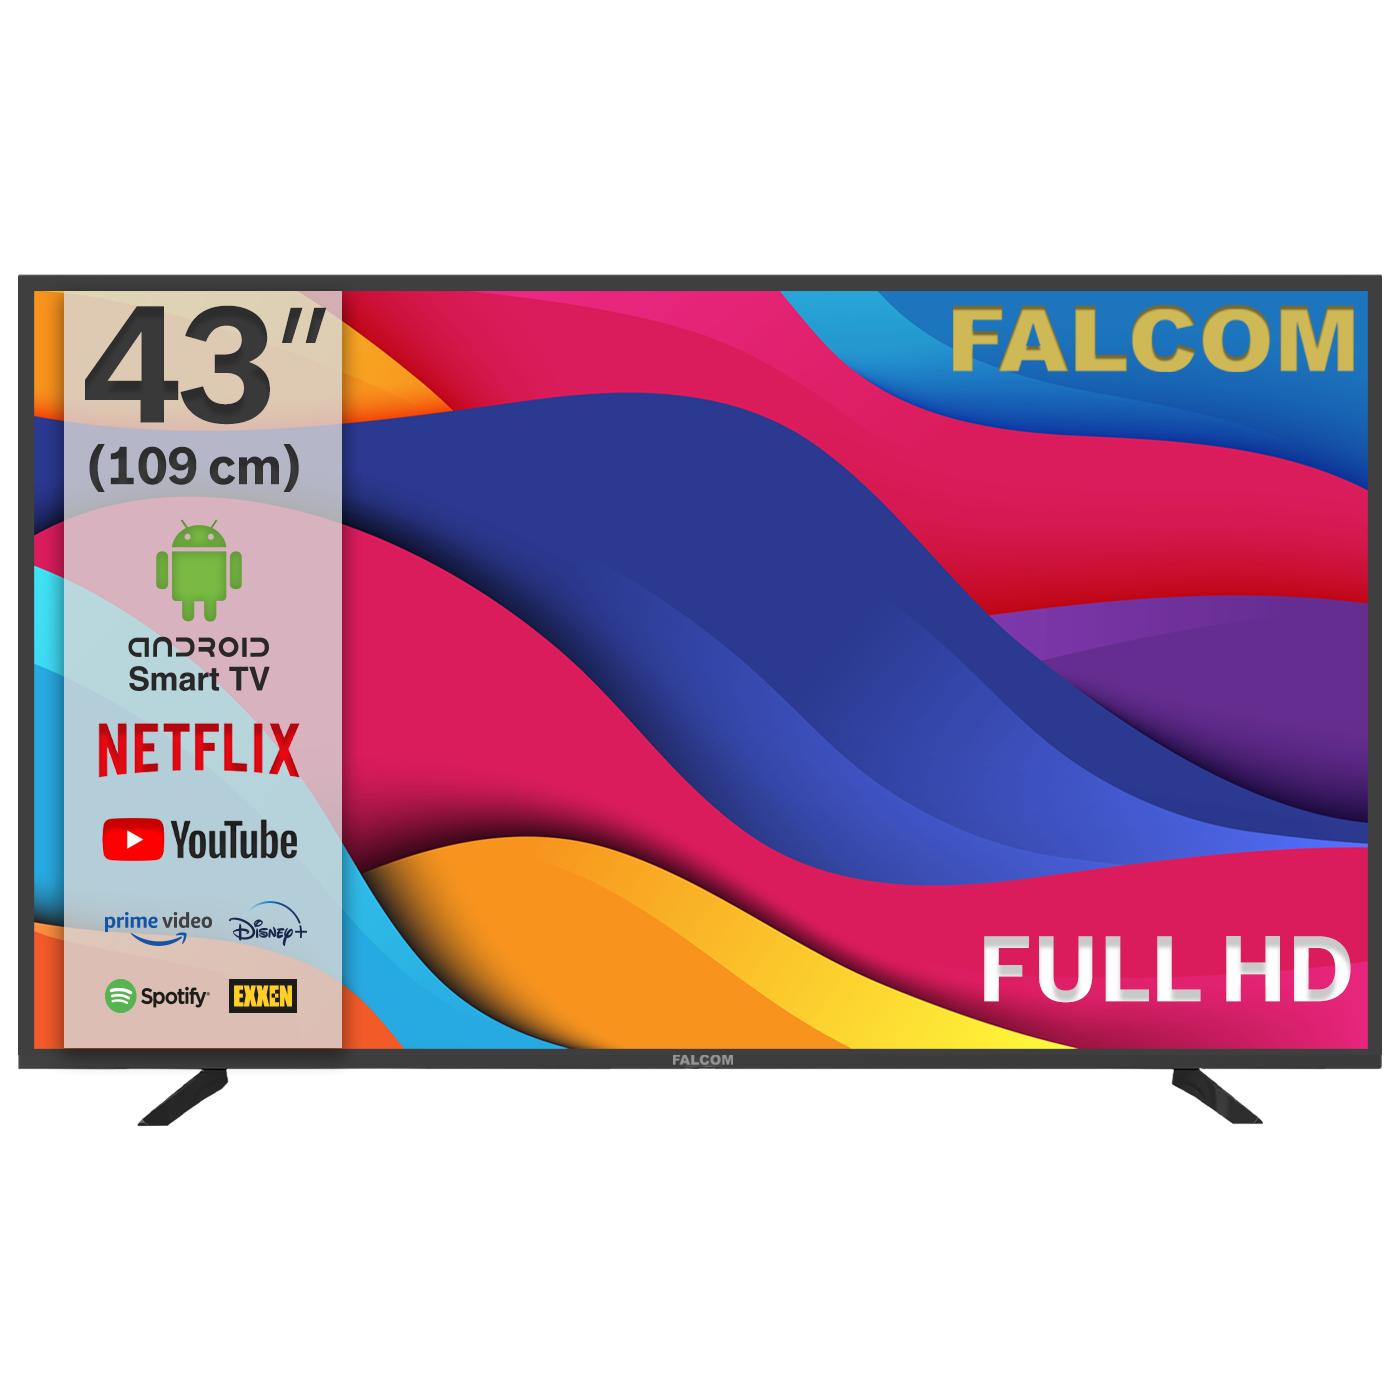 Falcom TV - Smart LED TV @Android 43